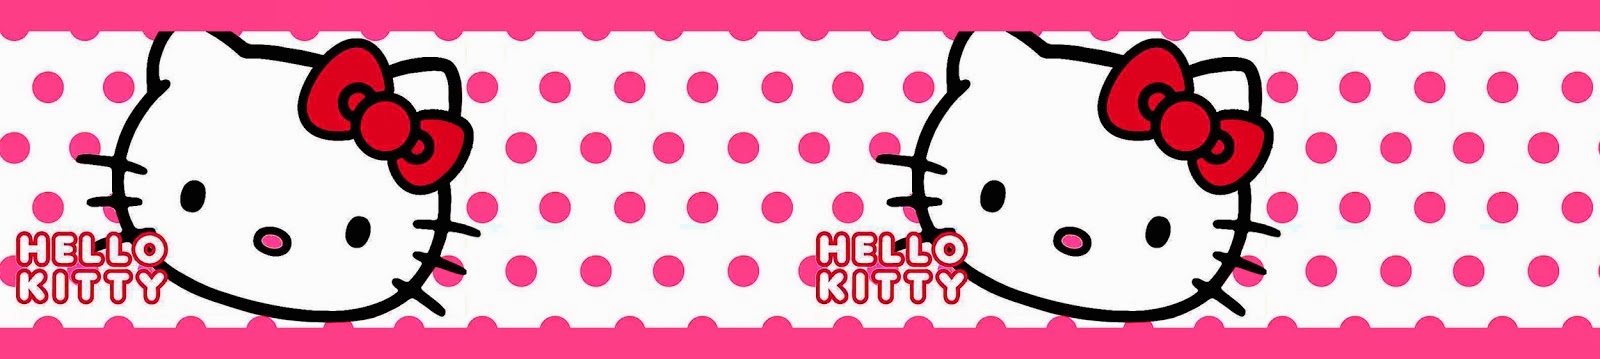 Wallpaper Border Hello Kitty